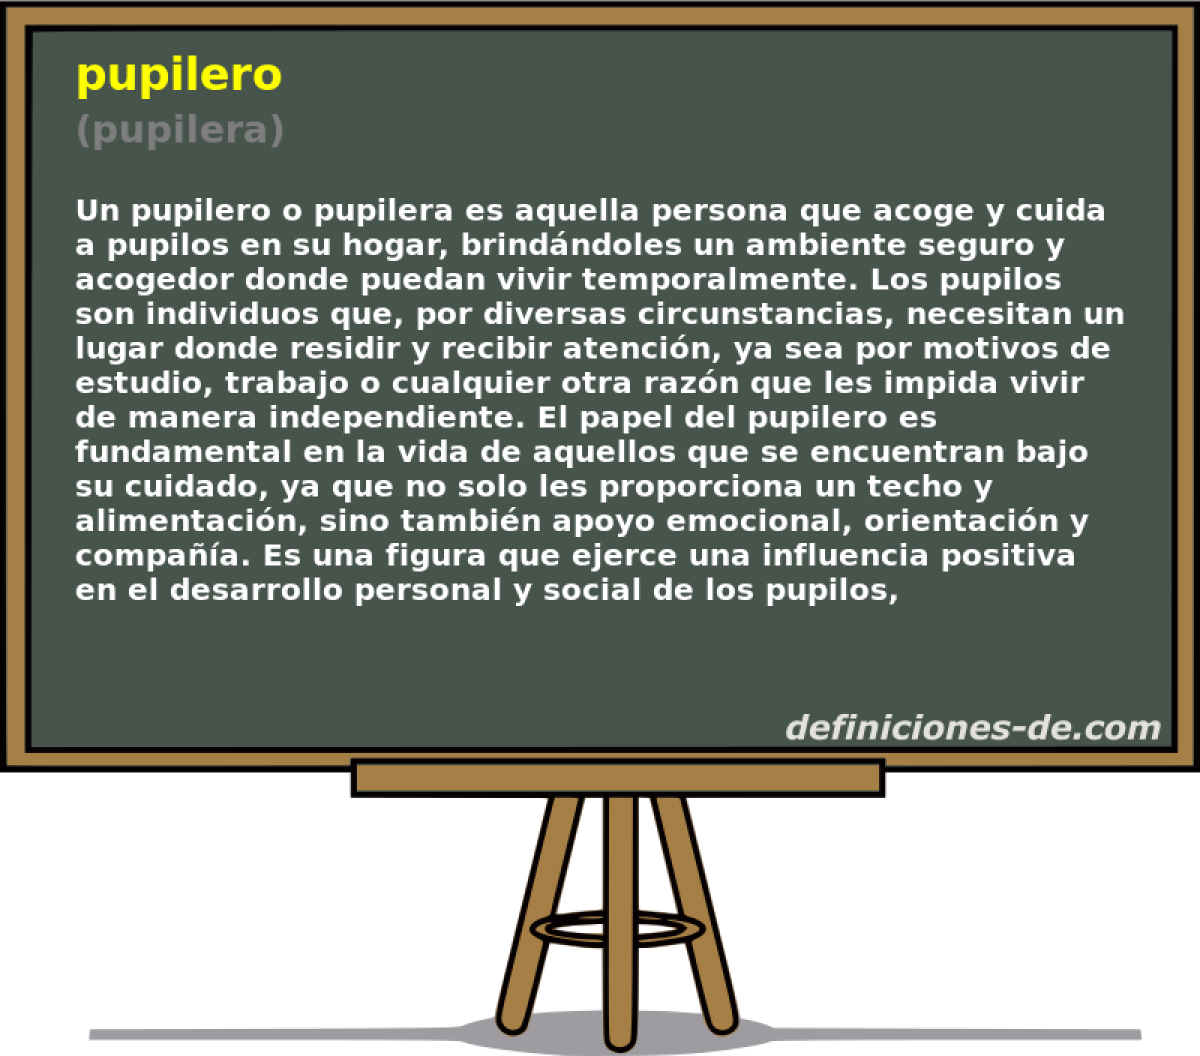 pupilero (pupilera)